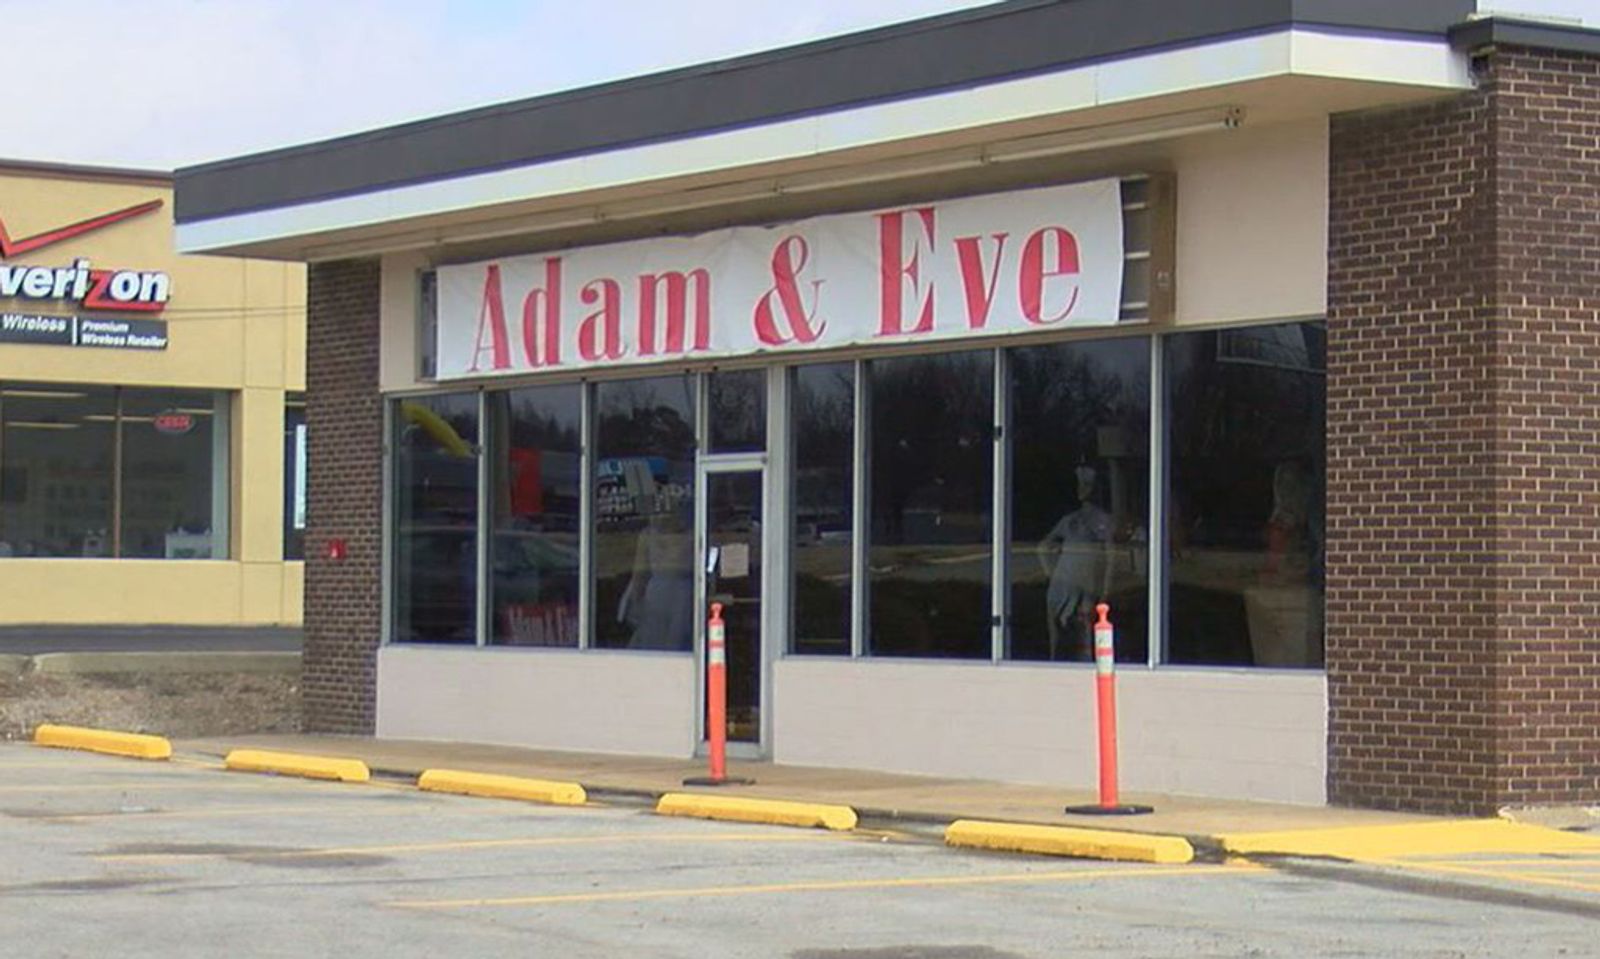 Eighth Circuit Locks the Door on Adam & Eve Store in Jonesboro